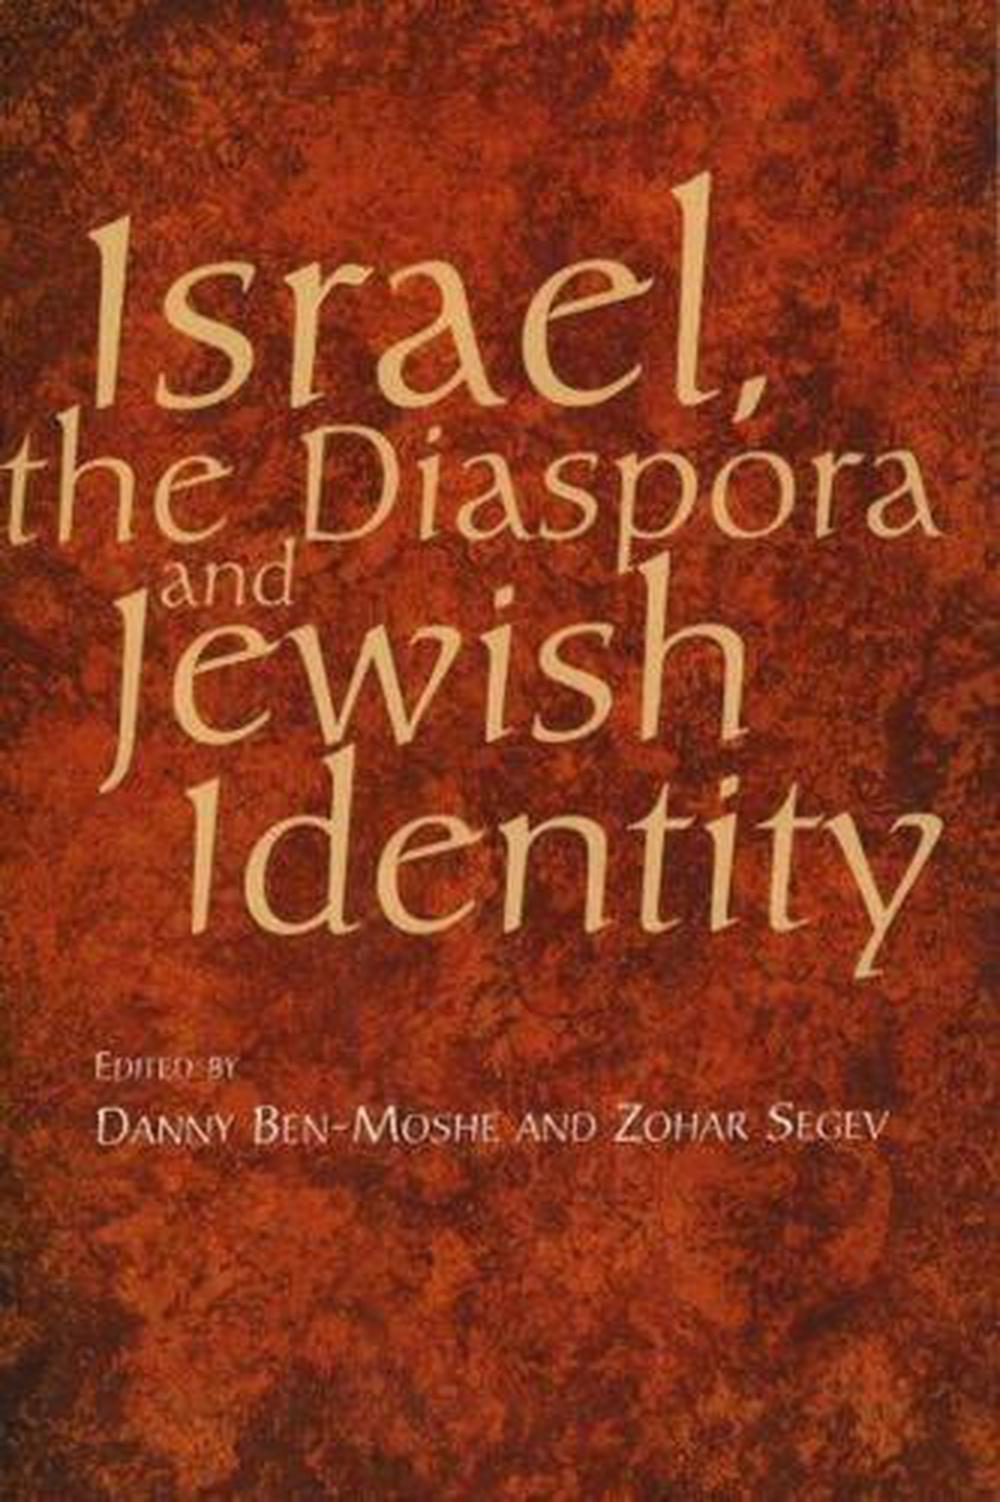 essay about jewish identity